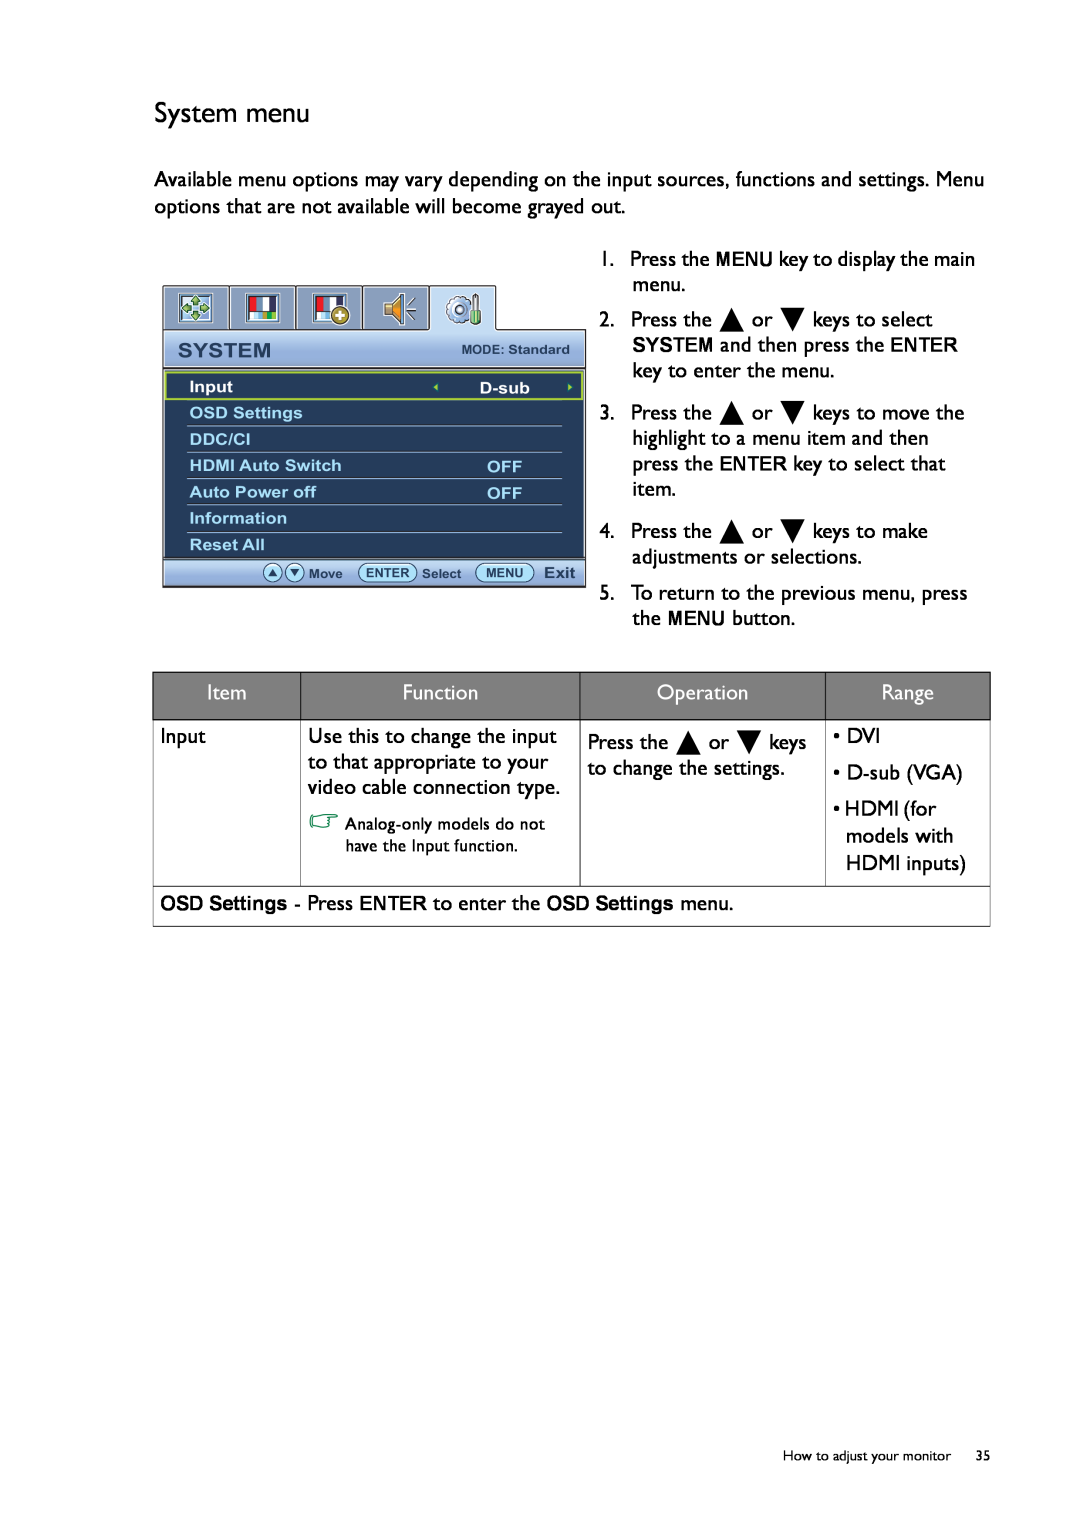 BenQ GL50, G50 System menu, Function, Operation, Range, OSD Settings - Press ENTER to enter the OSD Settings menu 